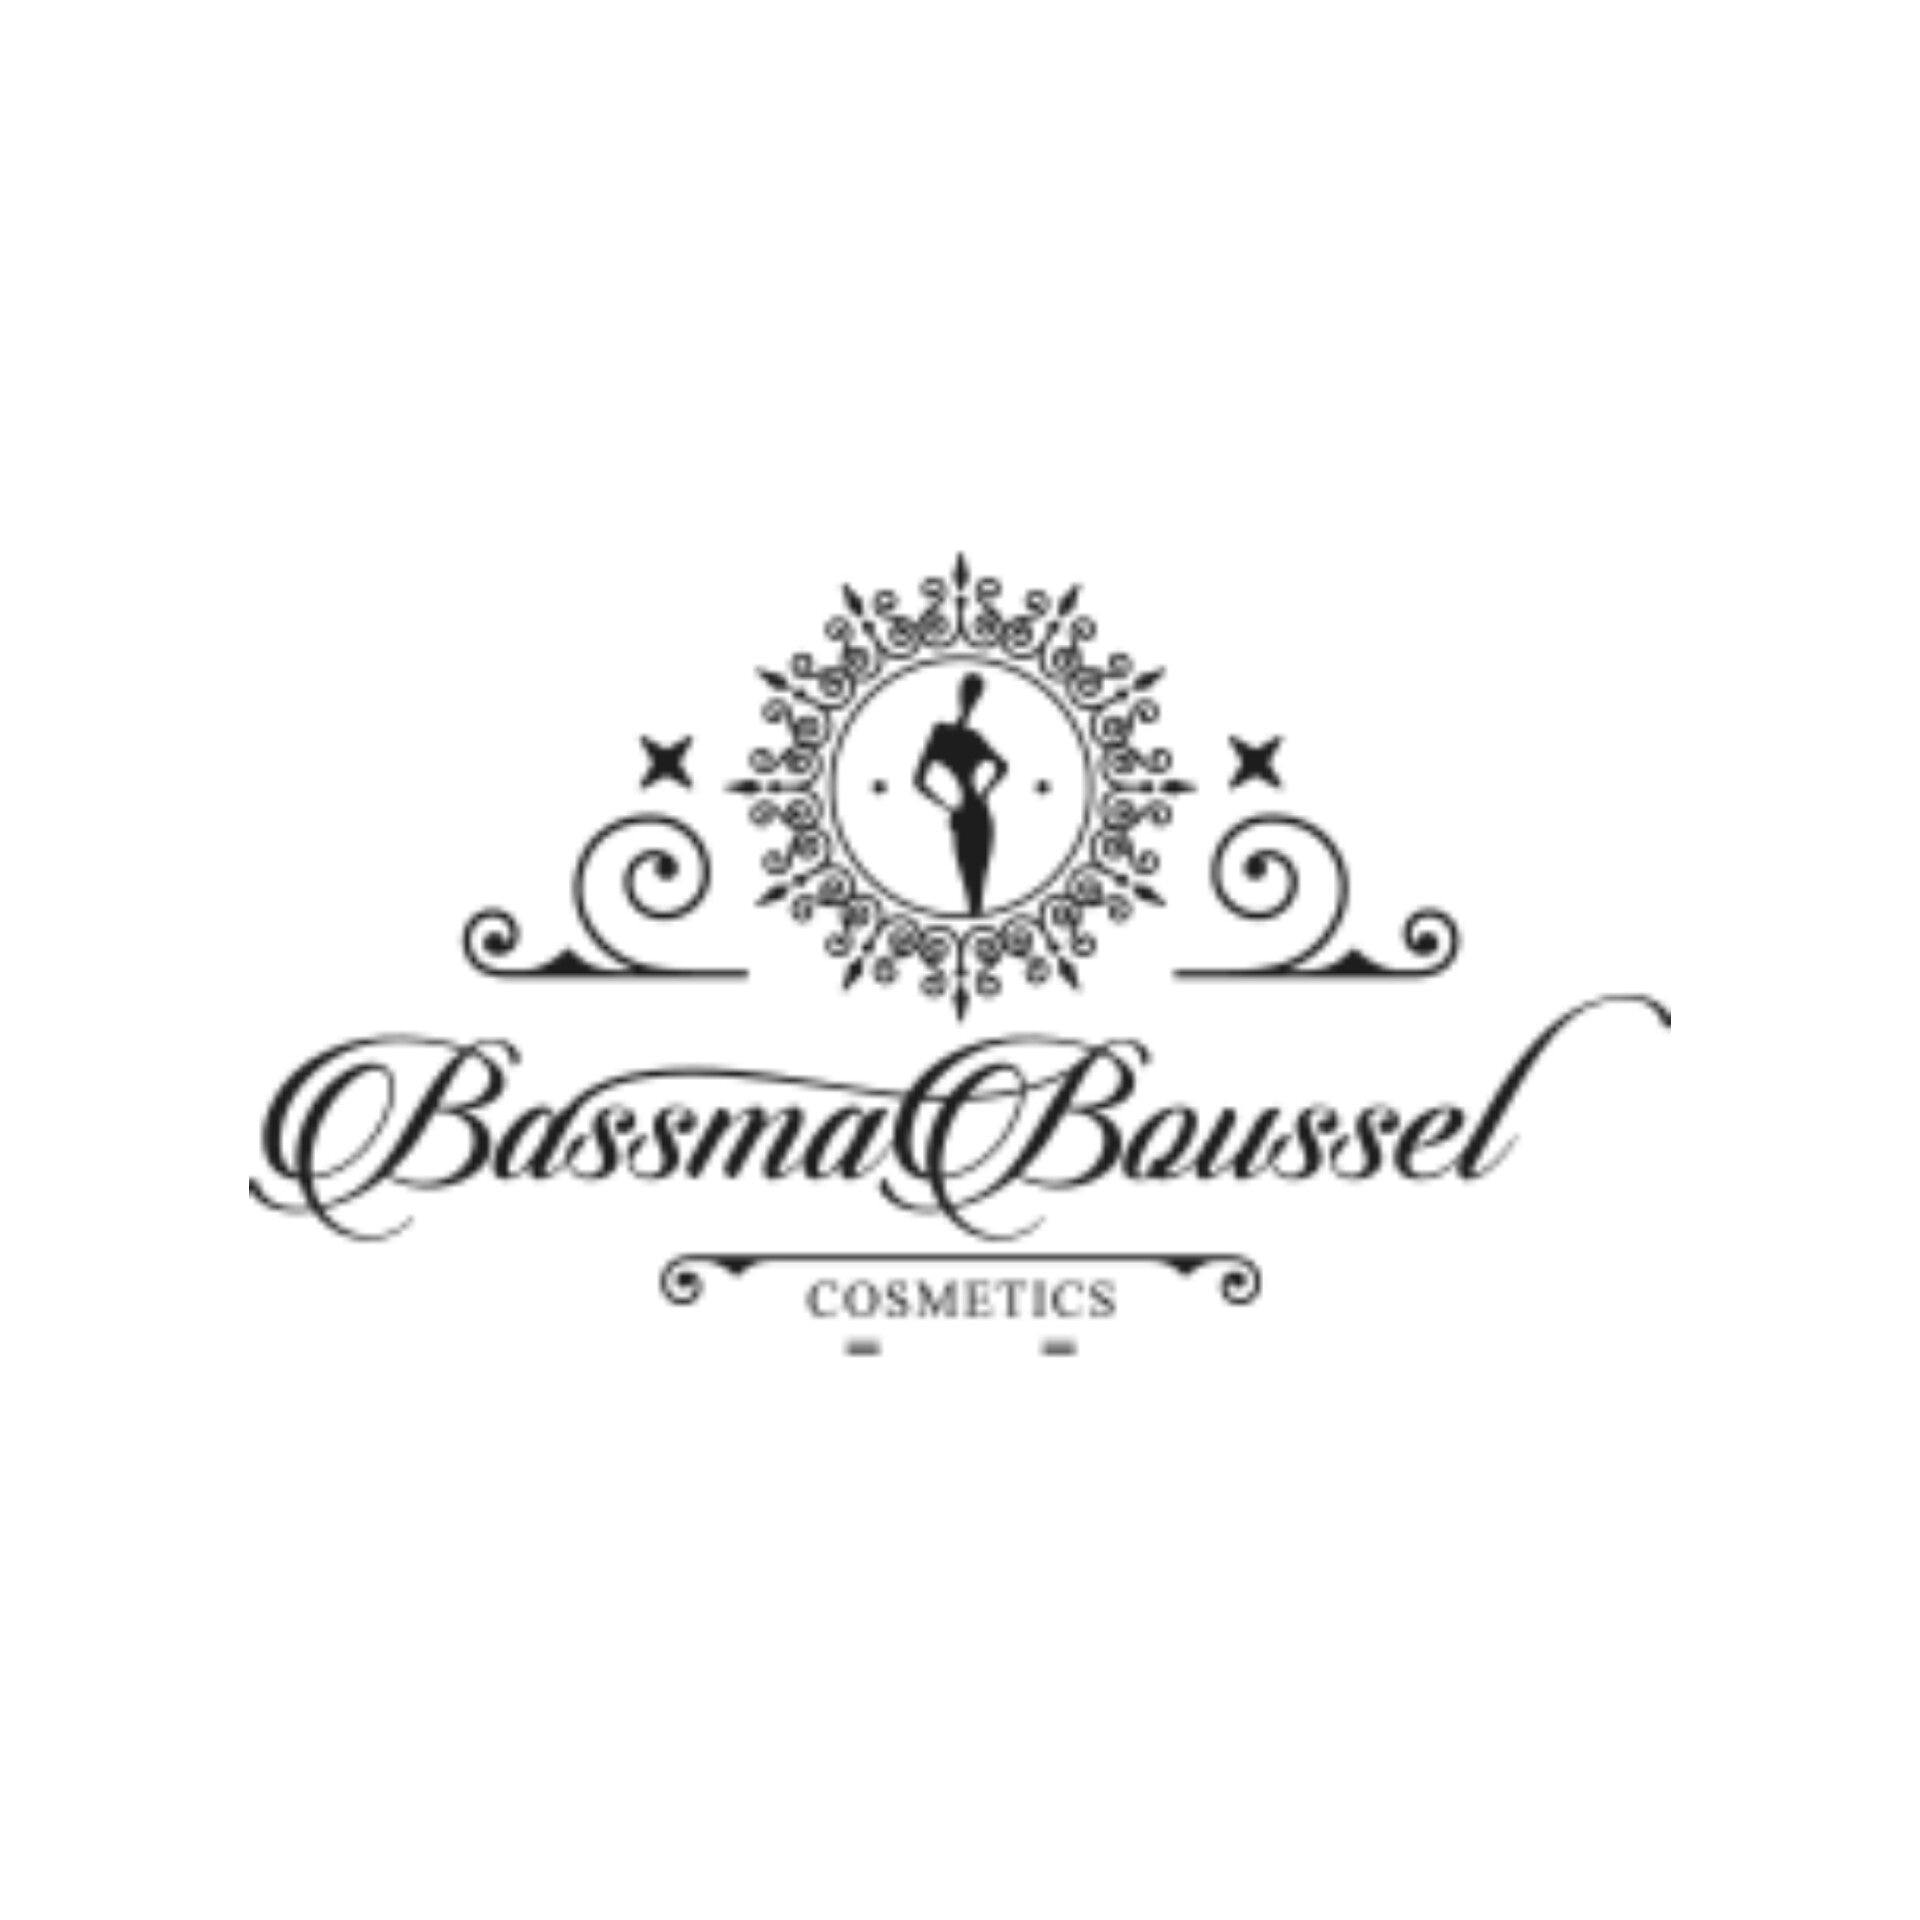 BASSMA BOUSSEL COSMETICS